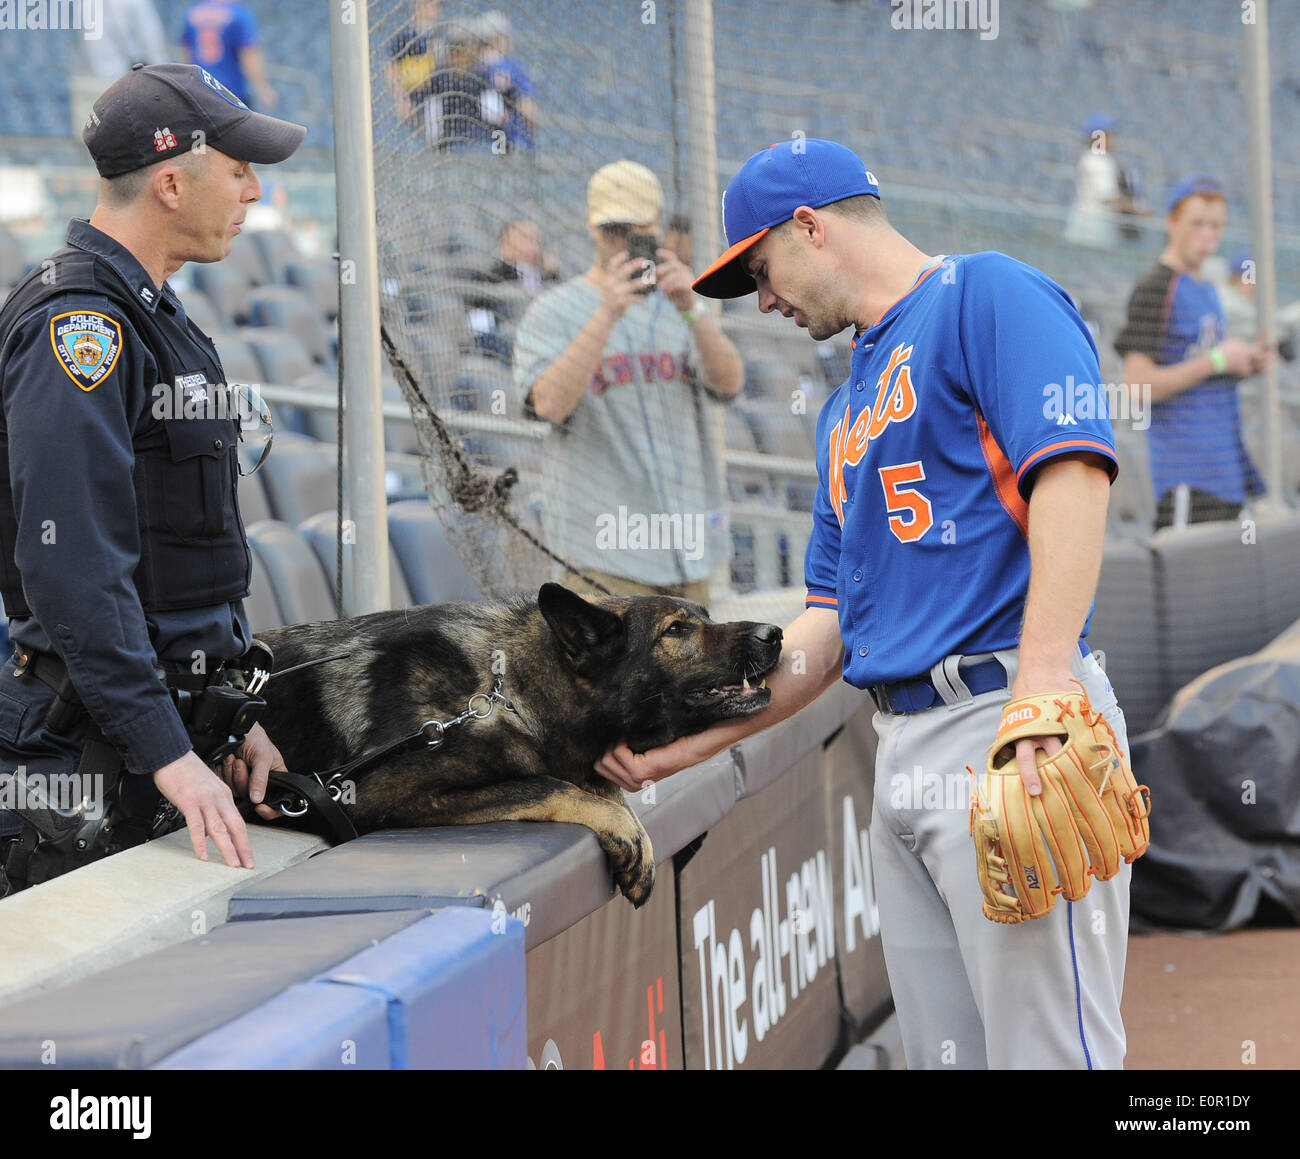 David Wright: His Mets career photo album - Newsday